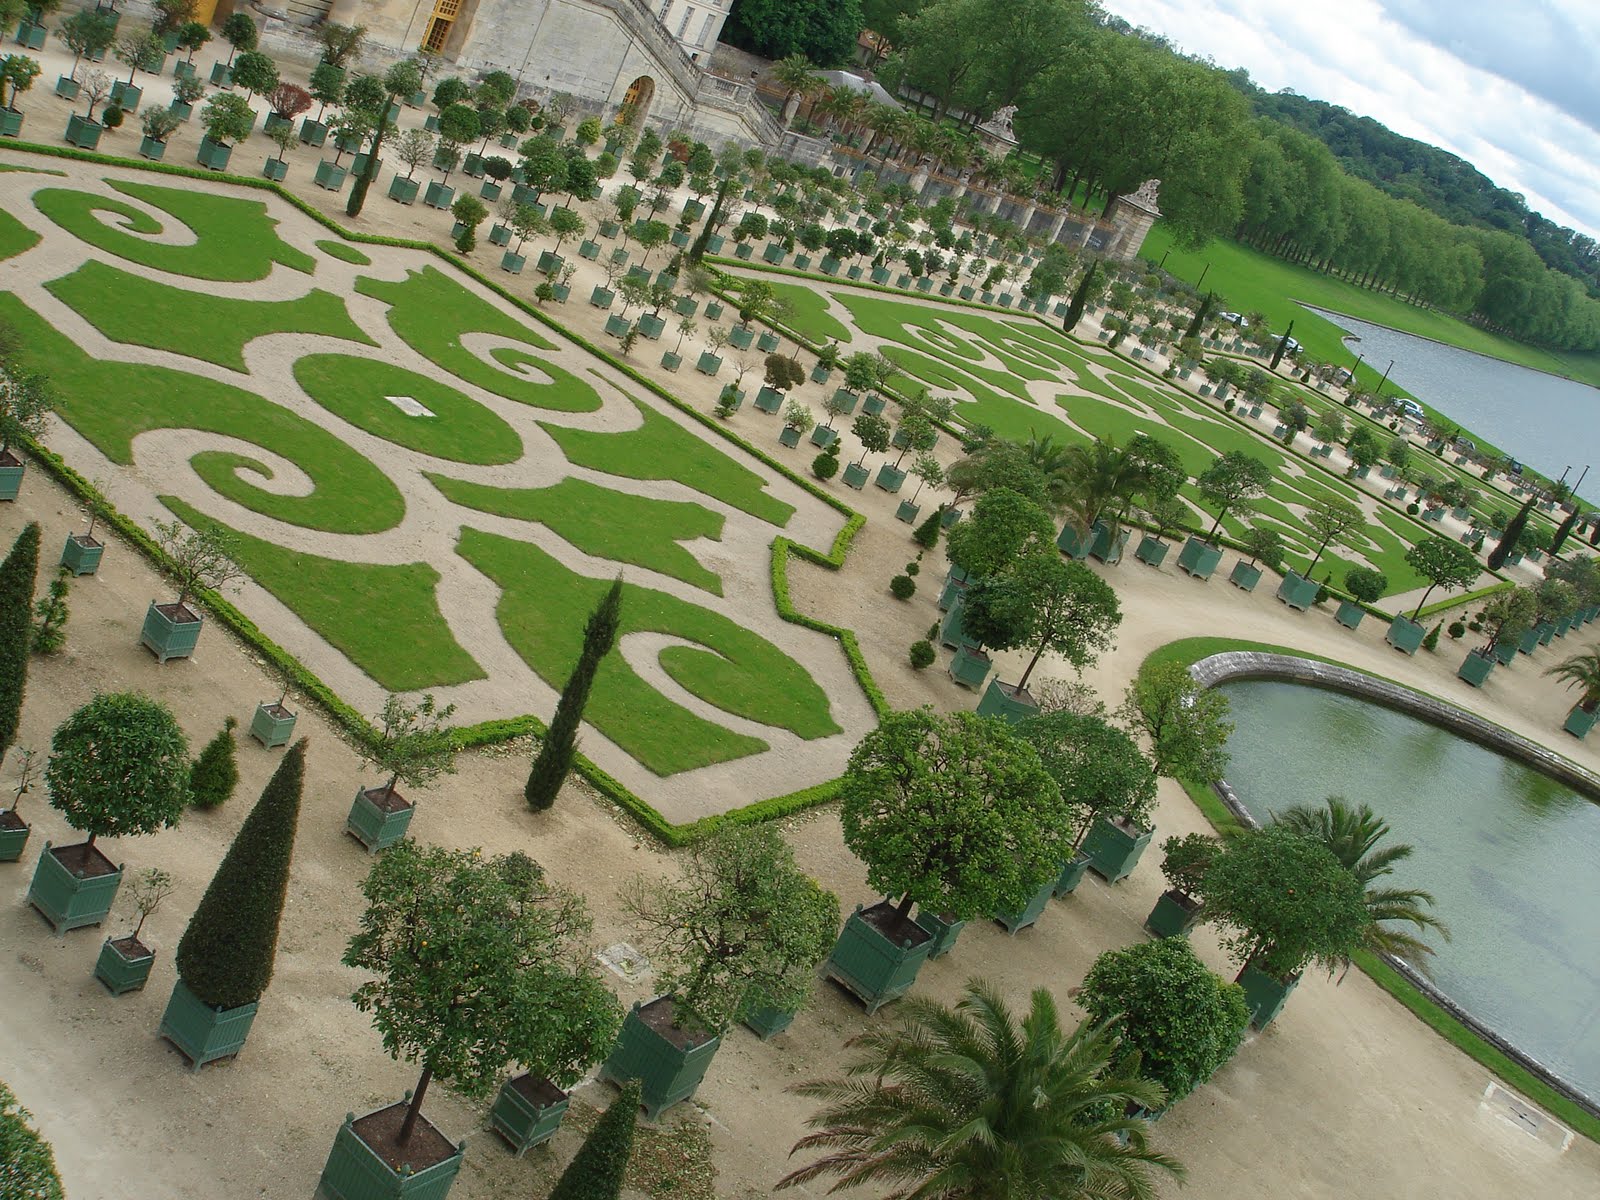 [Versailles+is+the+most+famous+garden77garden,+gardens,+flower,+flowers,+luxury,+design,.jpg]